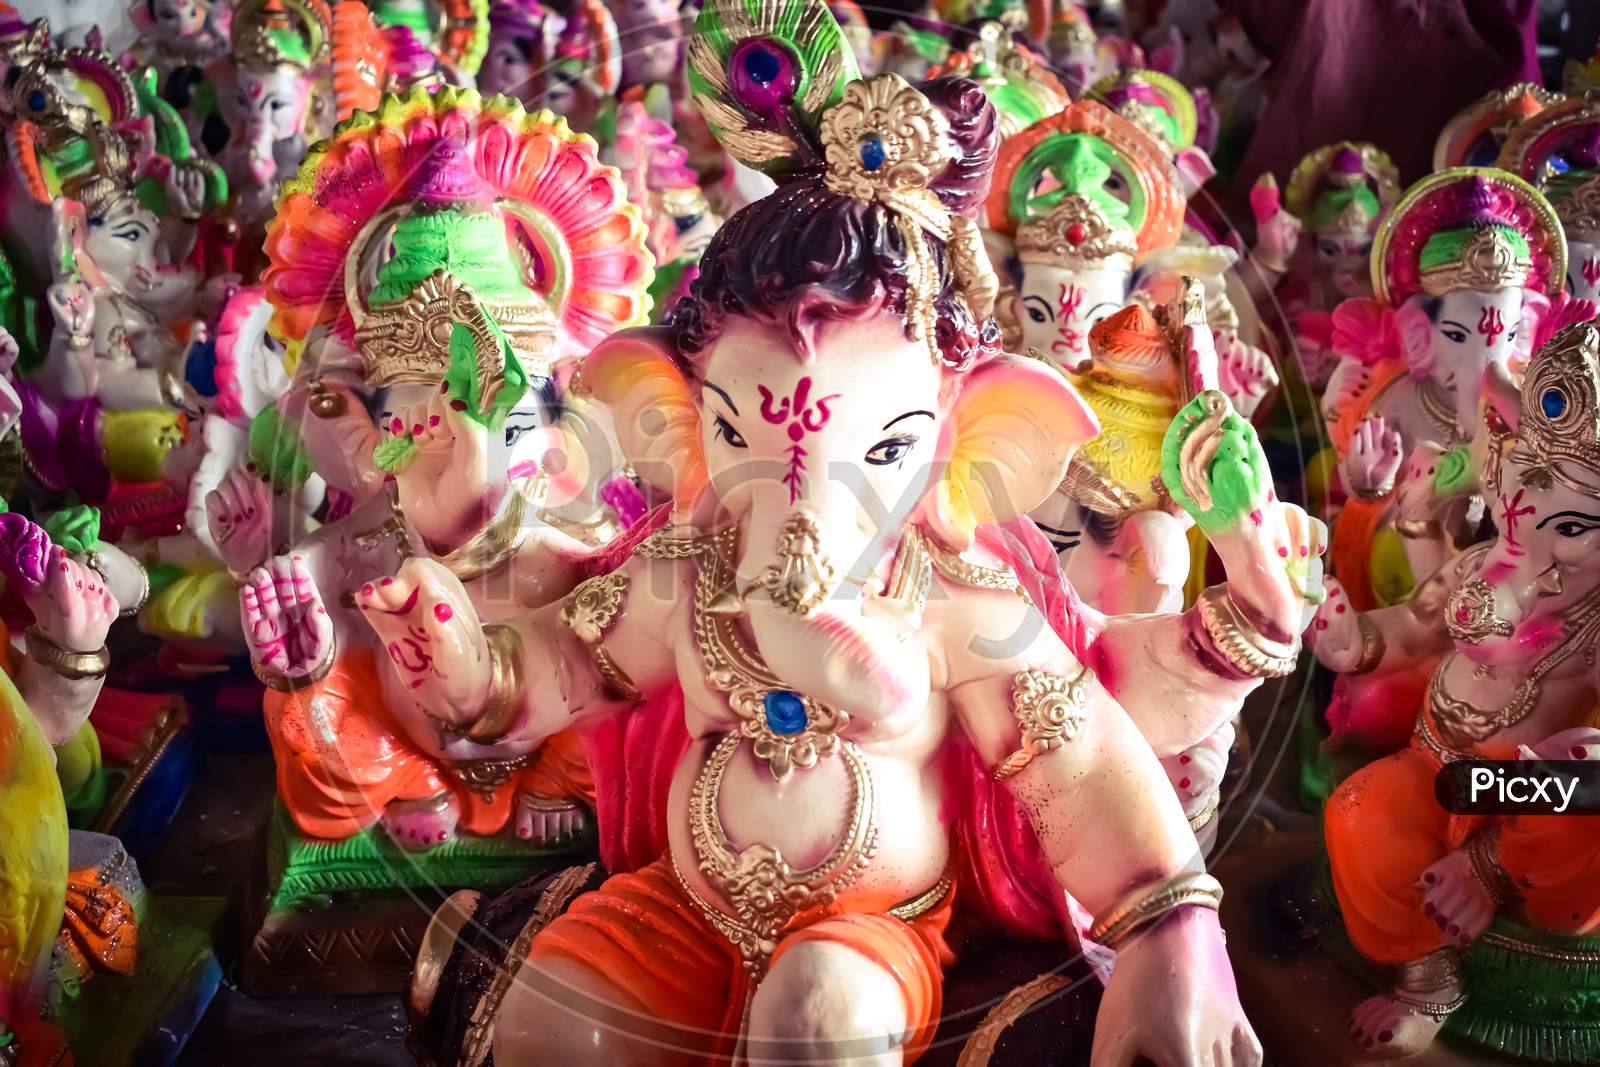 Lord Ganesha statues